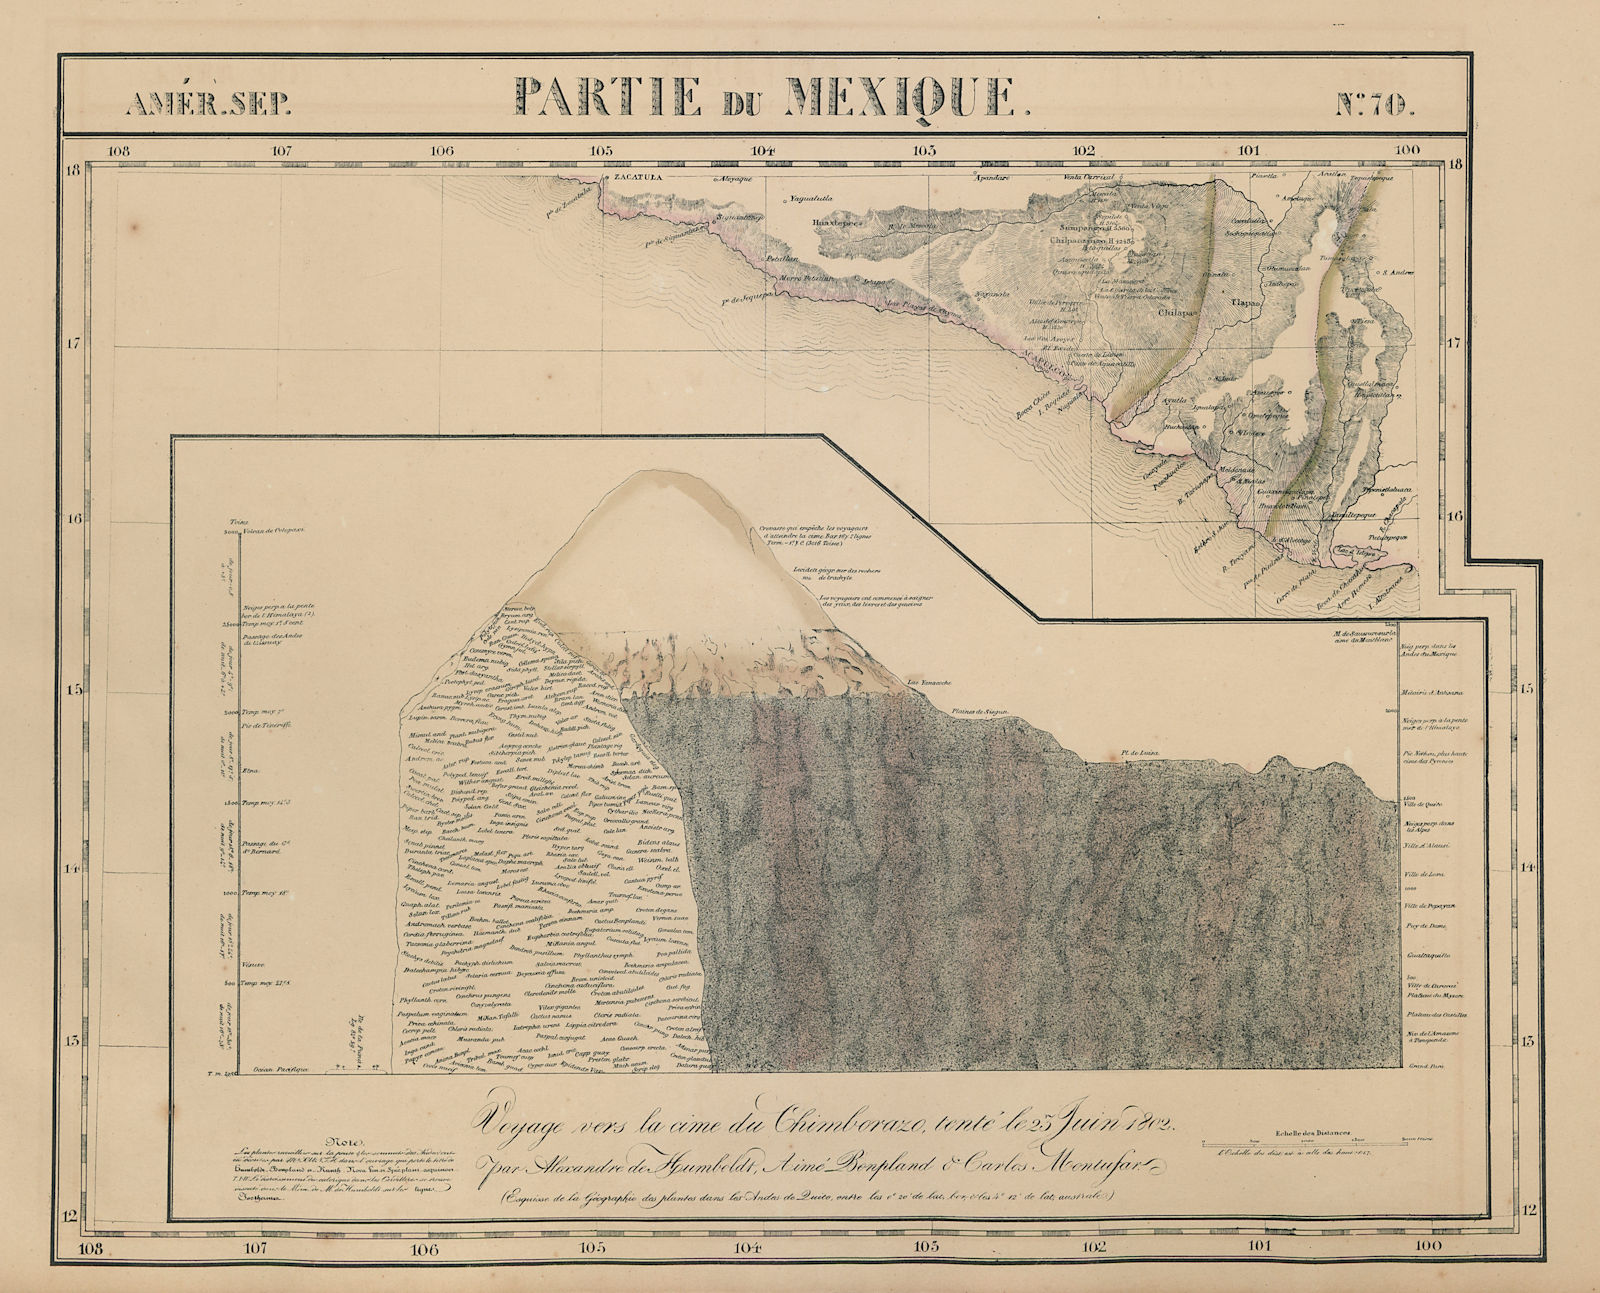 Amér Sep. Partie du Mexique #70 Acapulco Mexico Chimborazo VANDERMAELEN 1827 map